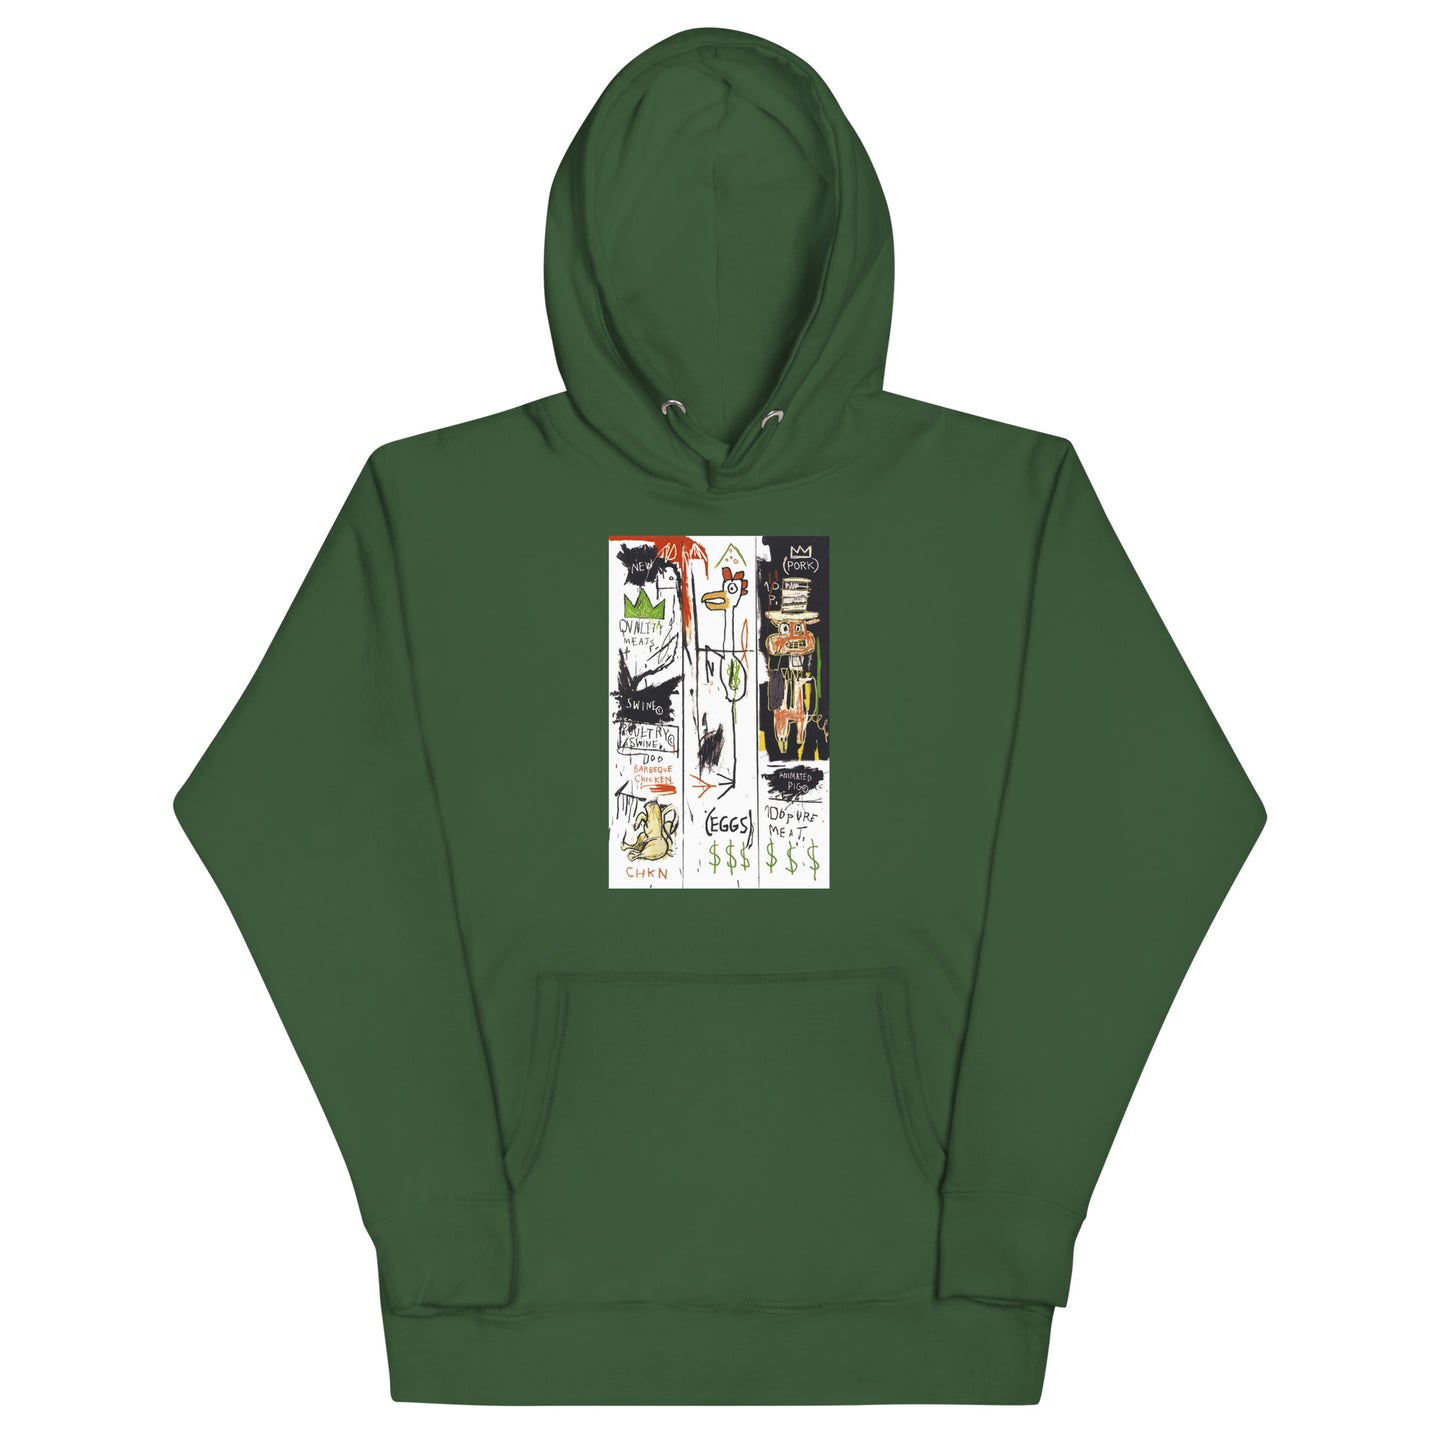 Jean-Michel Basquiat "Quality Meats for the Public" 1982 Artwork Printed Premium Streetwear Sweatshirt Hoodie Forest Green